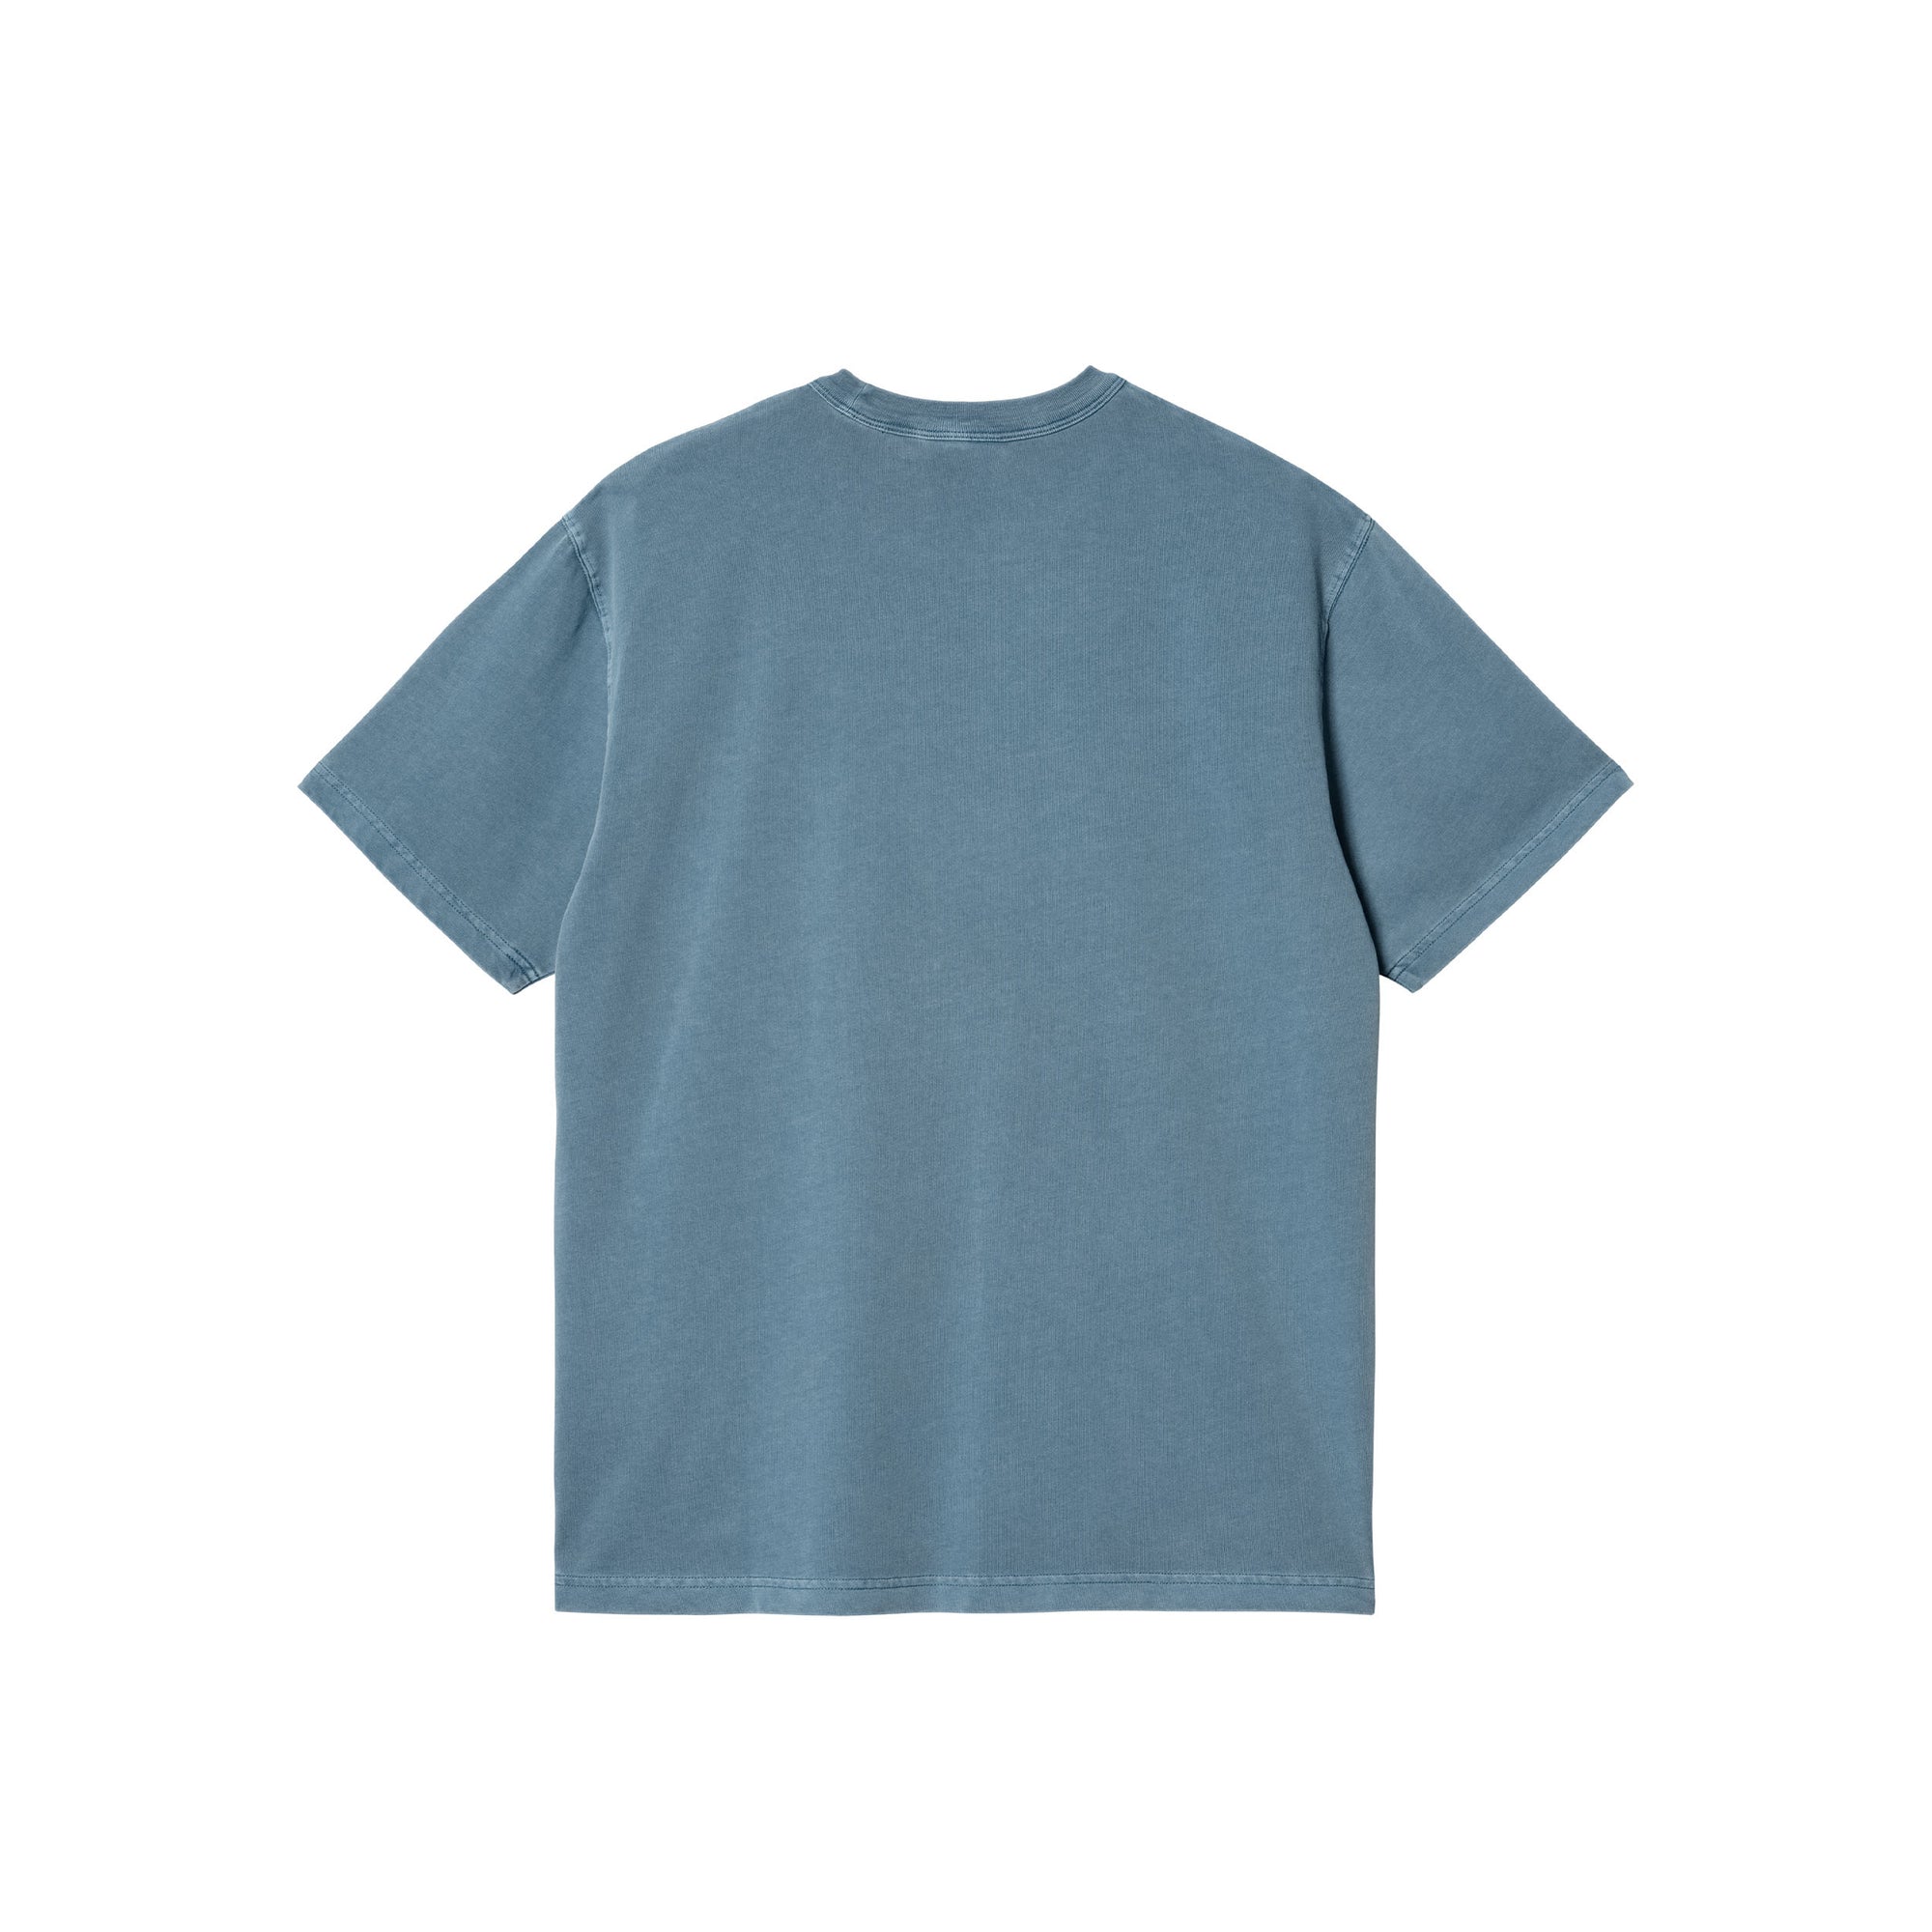 Carhartt WIP S/S Taos T-shirt (vancouver blue garment dye) - Blue Mountain Store